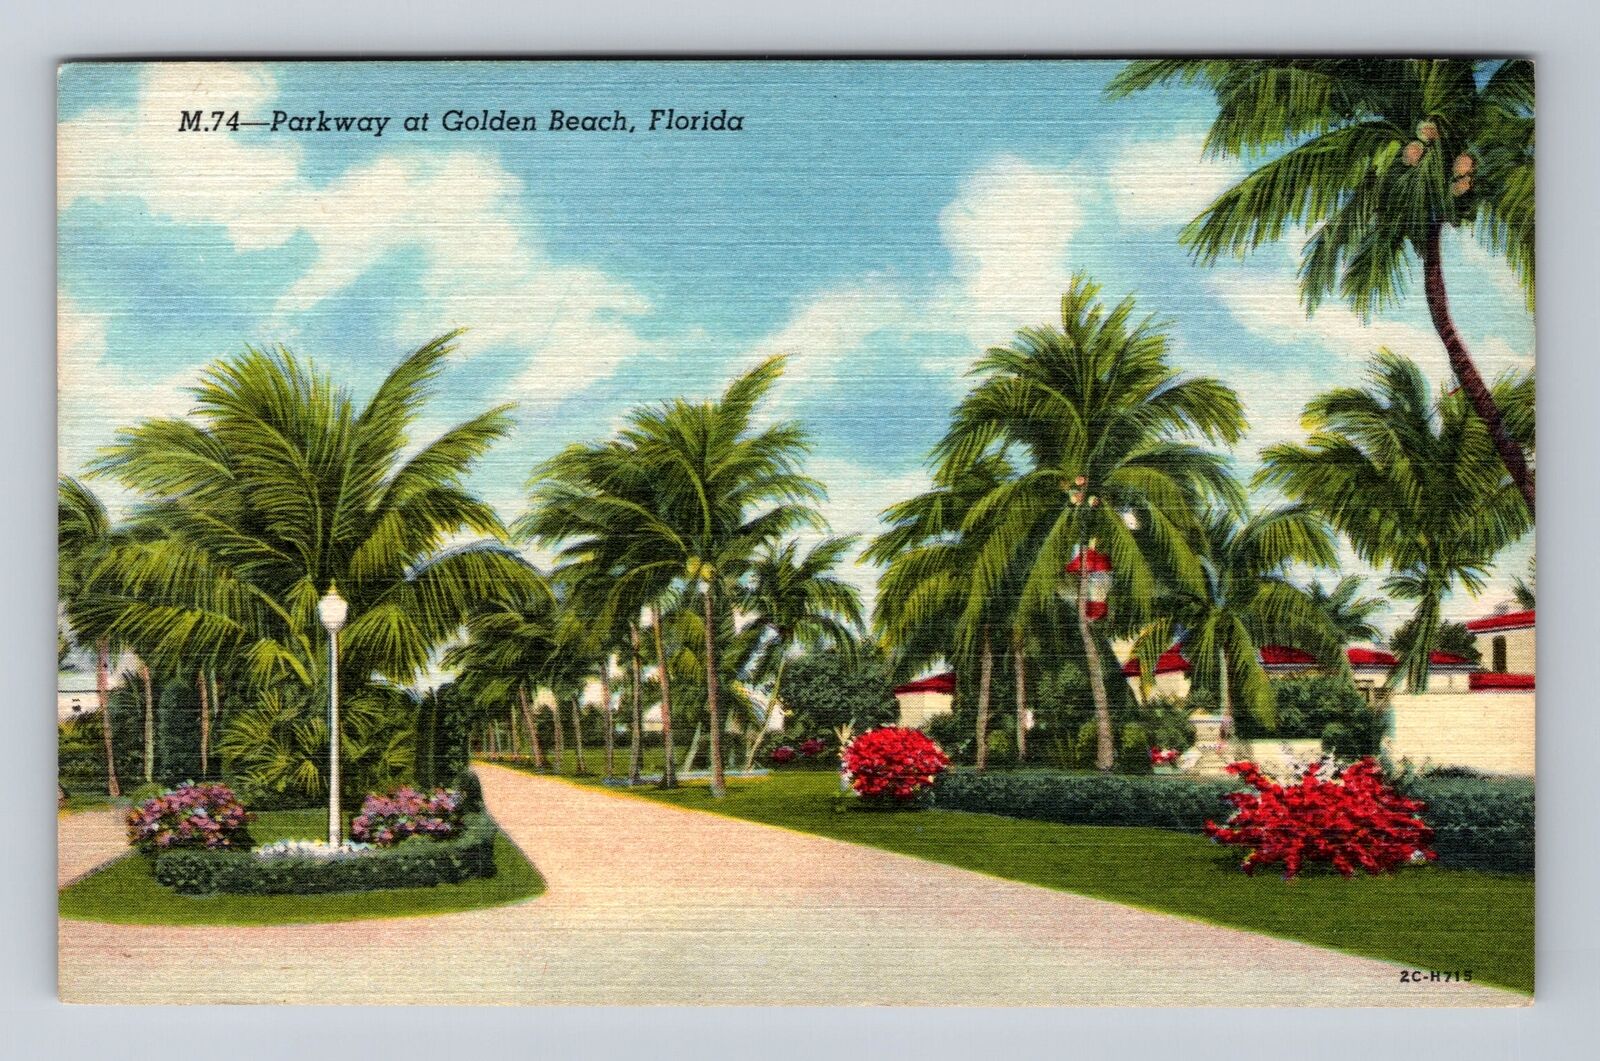 Golden Beach FL-Florida, Scenic Parkway at Golden Beach, Vintage Postcard